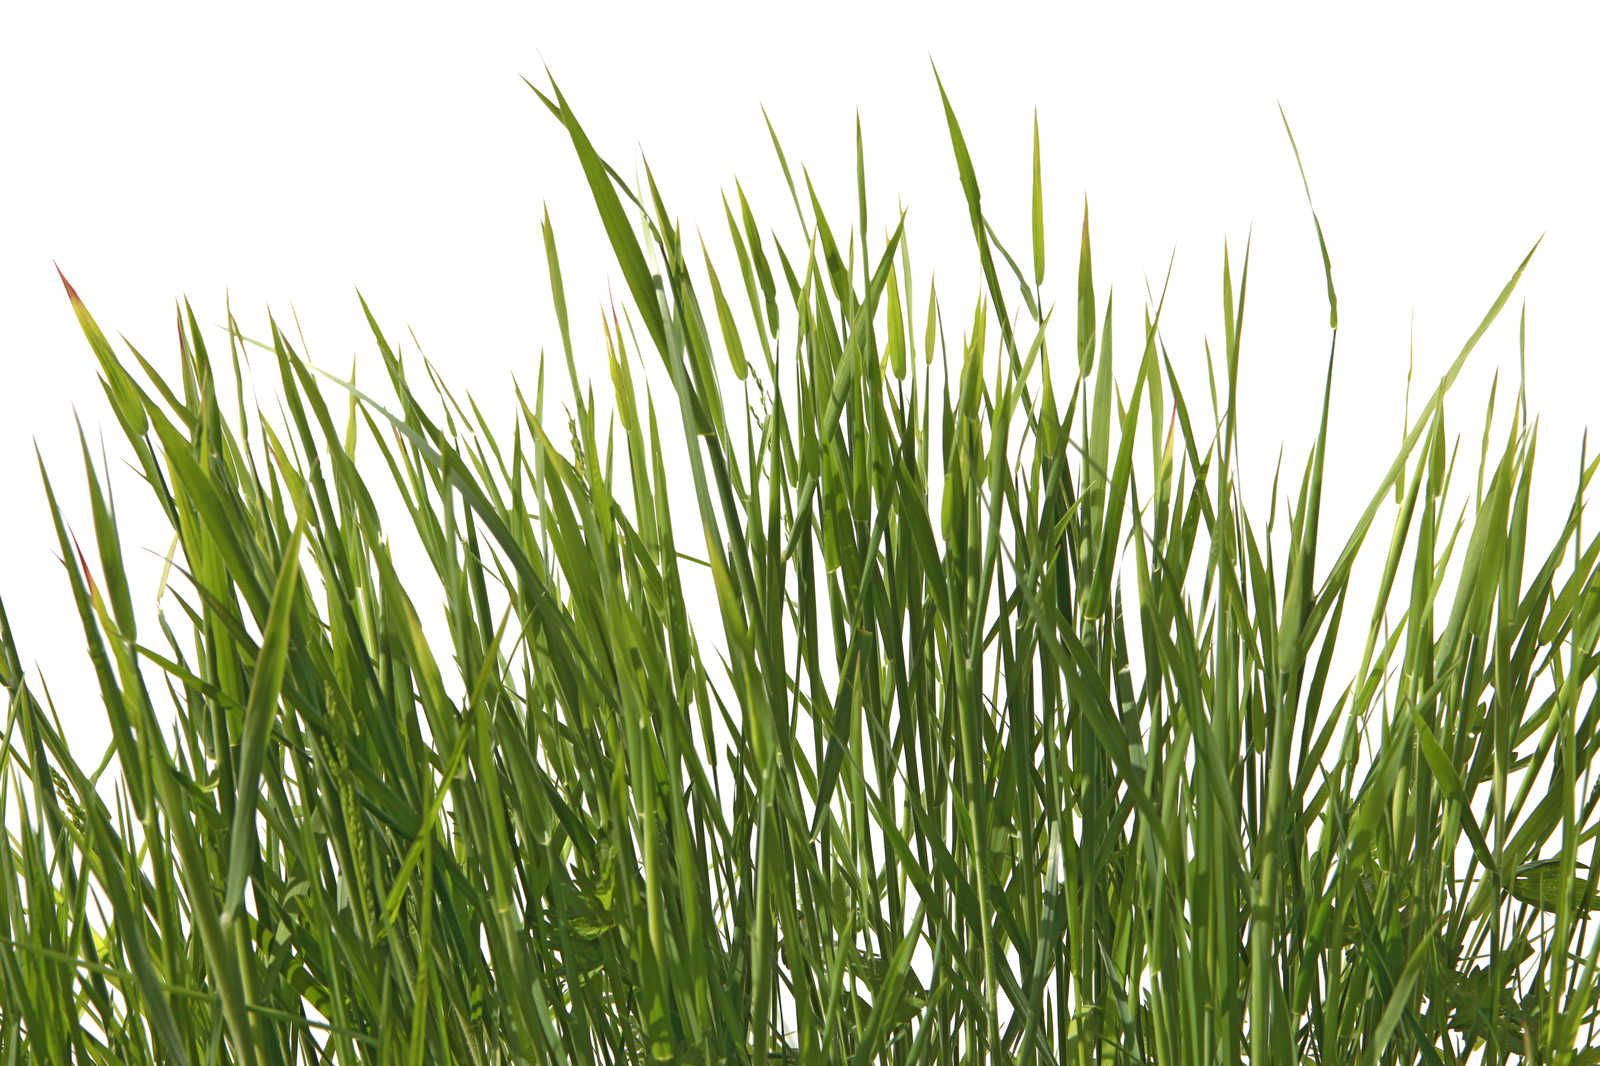             Cuadro Detalle hierbas con fondo blanco - 0,90 m x 0,60 m
        